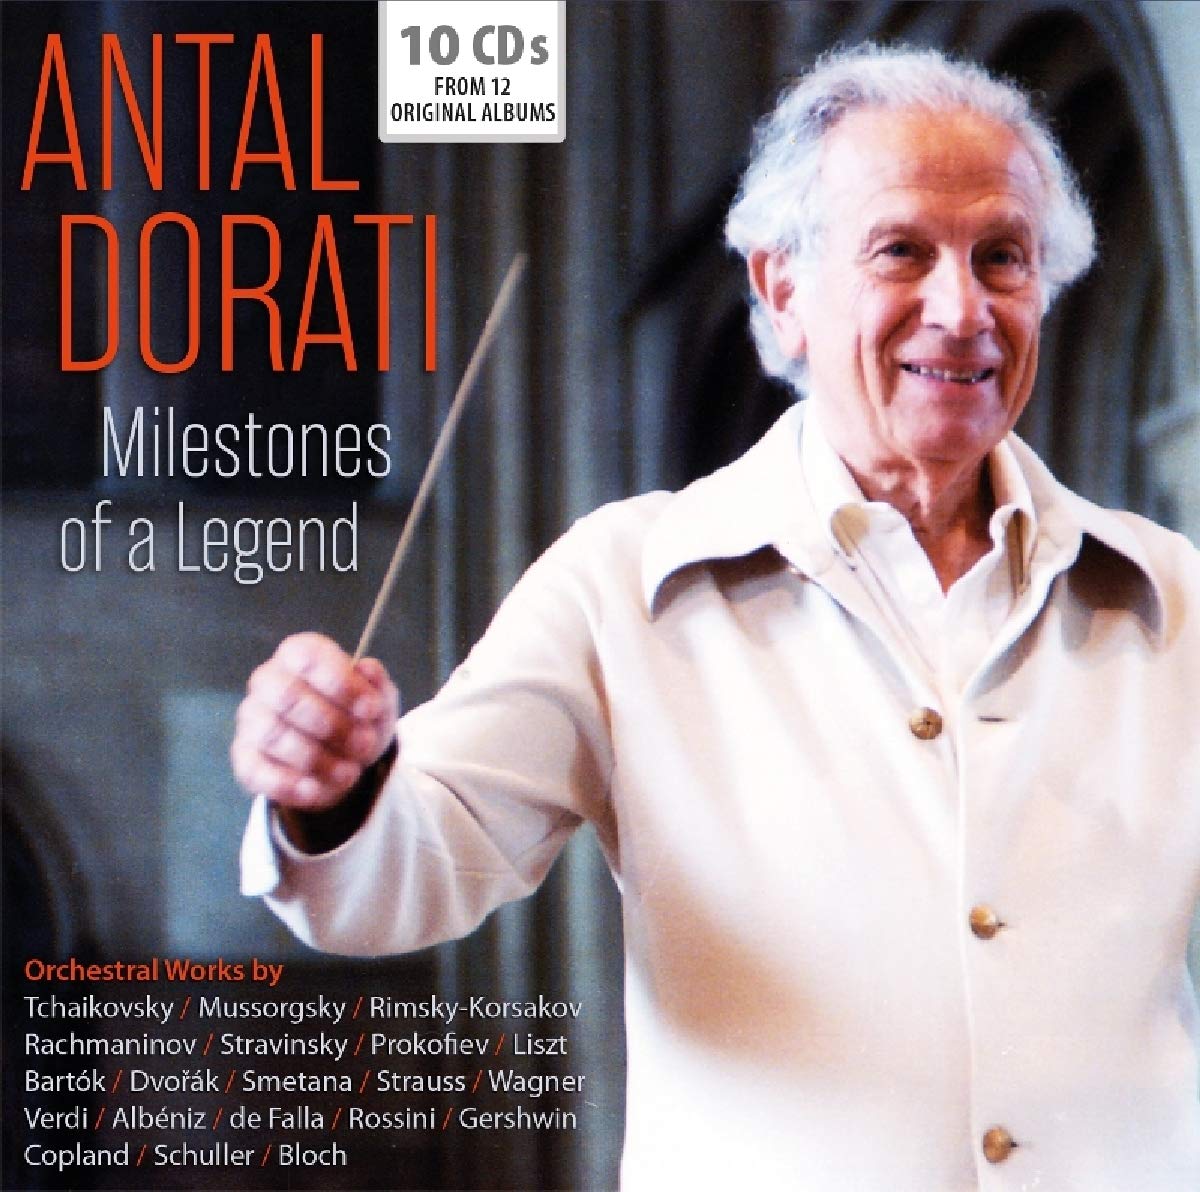 ANTAL DORATI - MILESTONES OF A LEGEND (10 CDS)